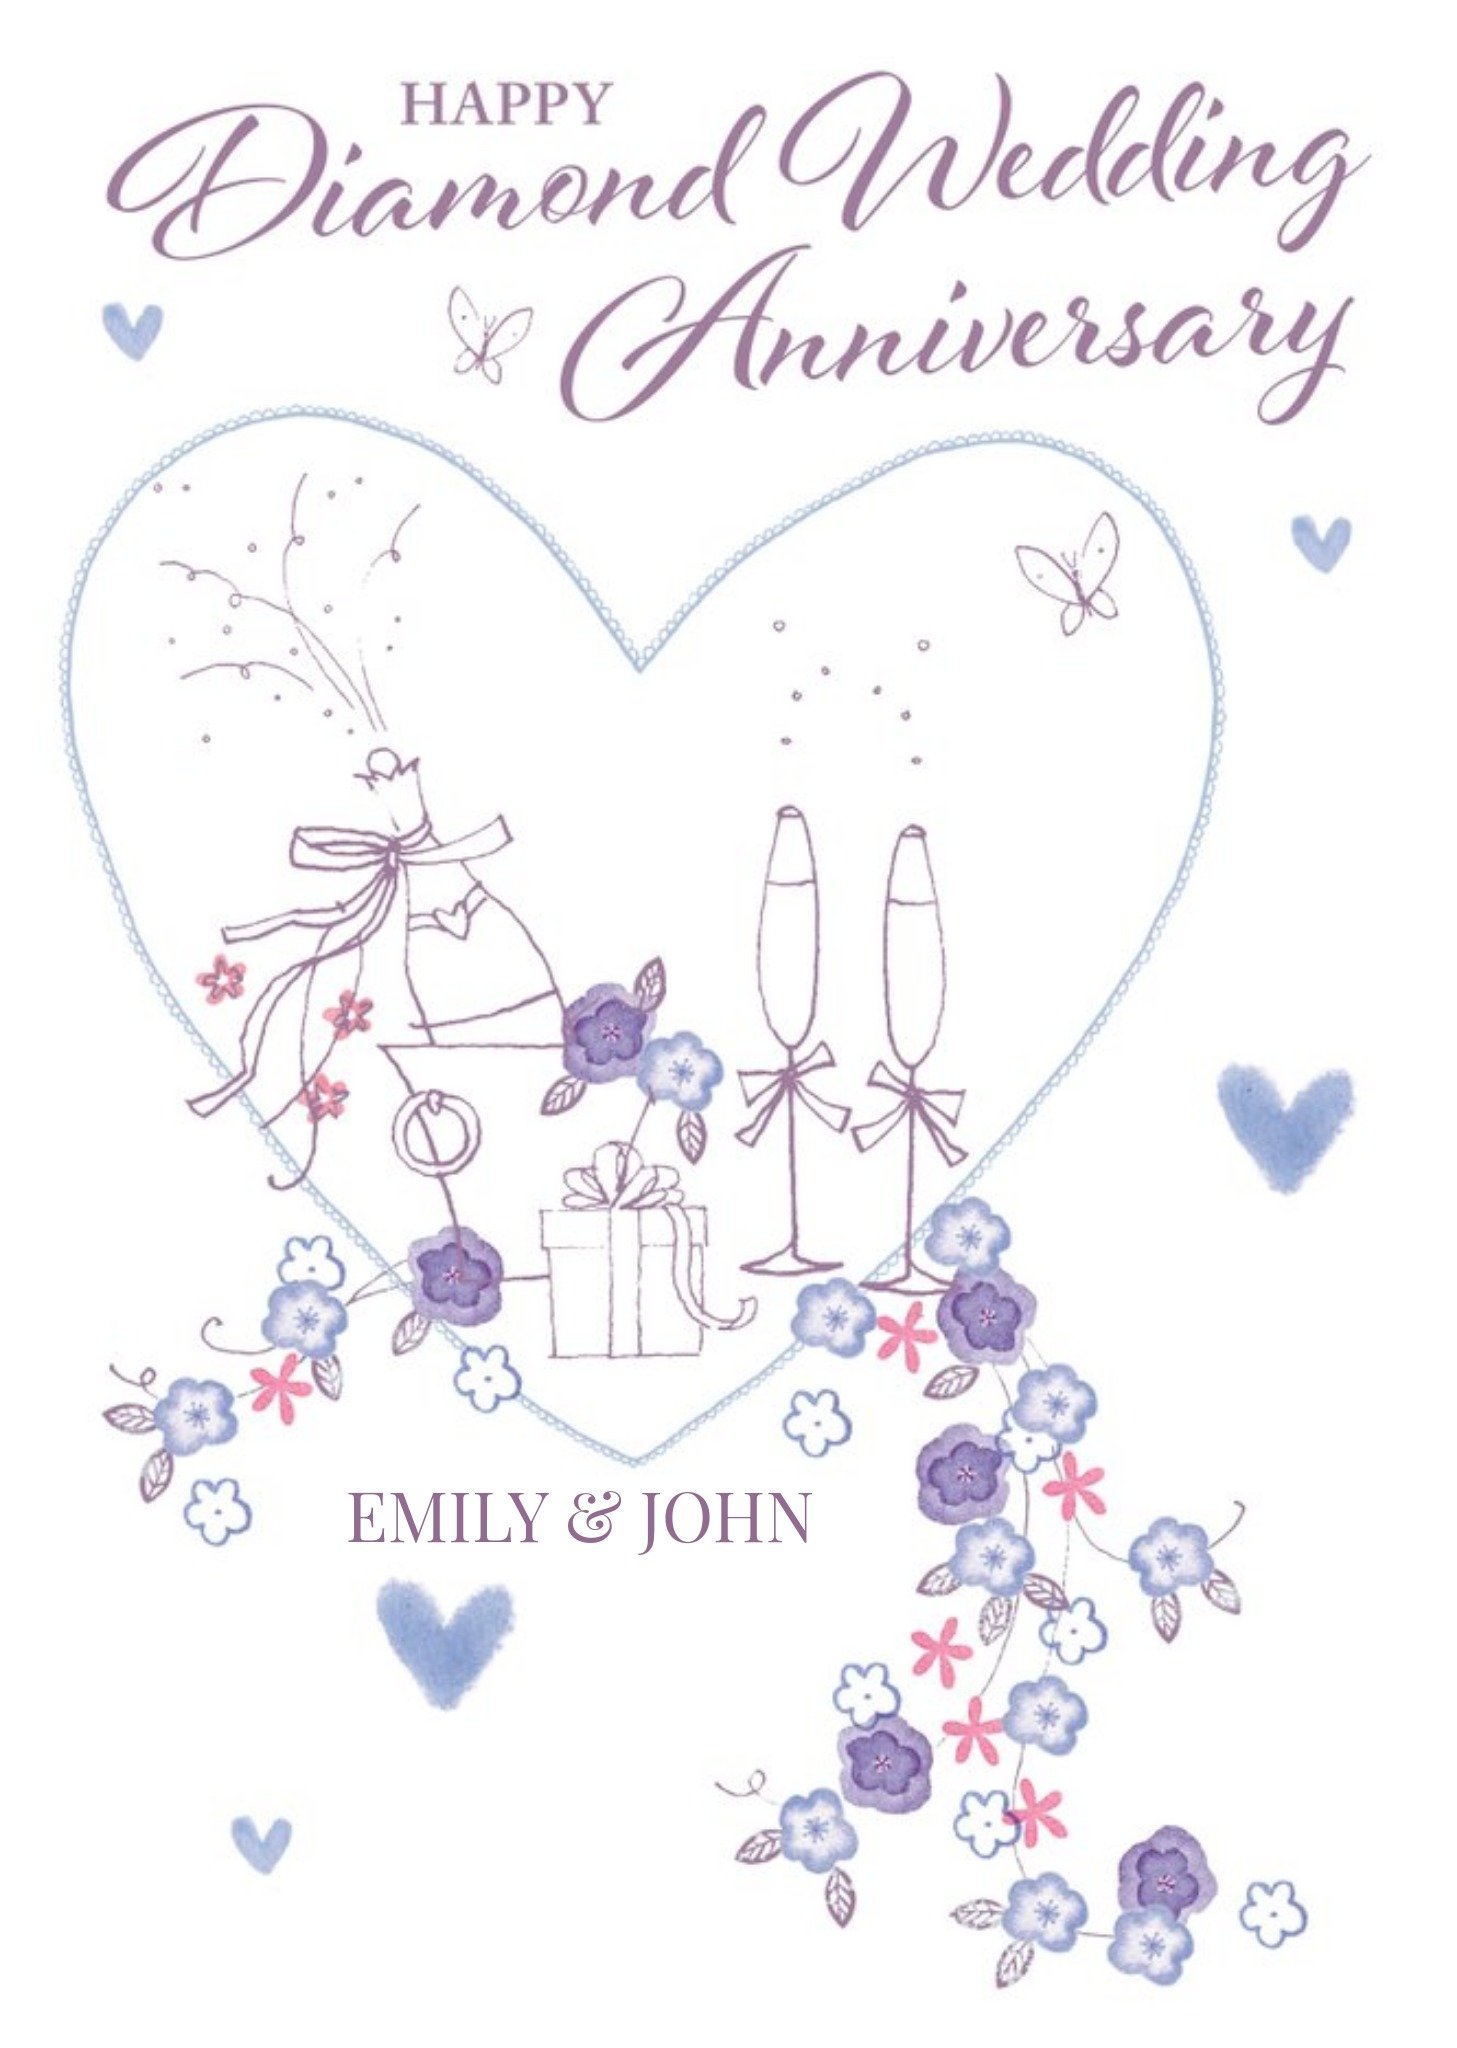 Moonpig Anniversary Card - Happy Diamond Wedding Anniversary Ecard